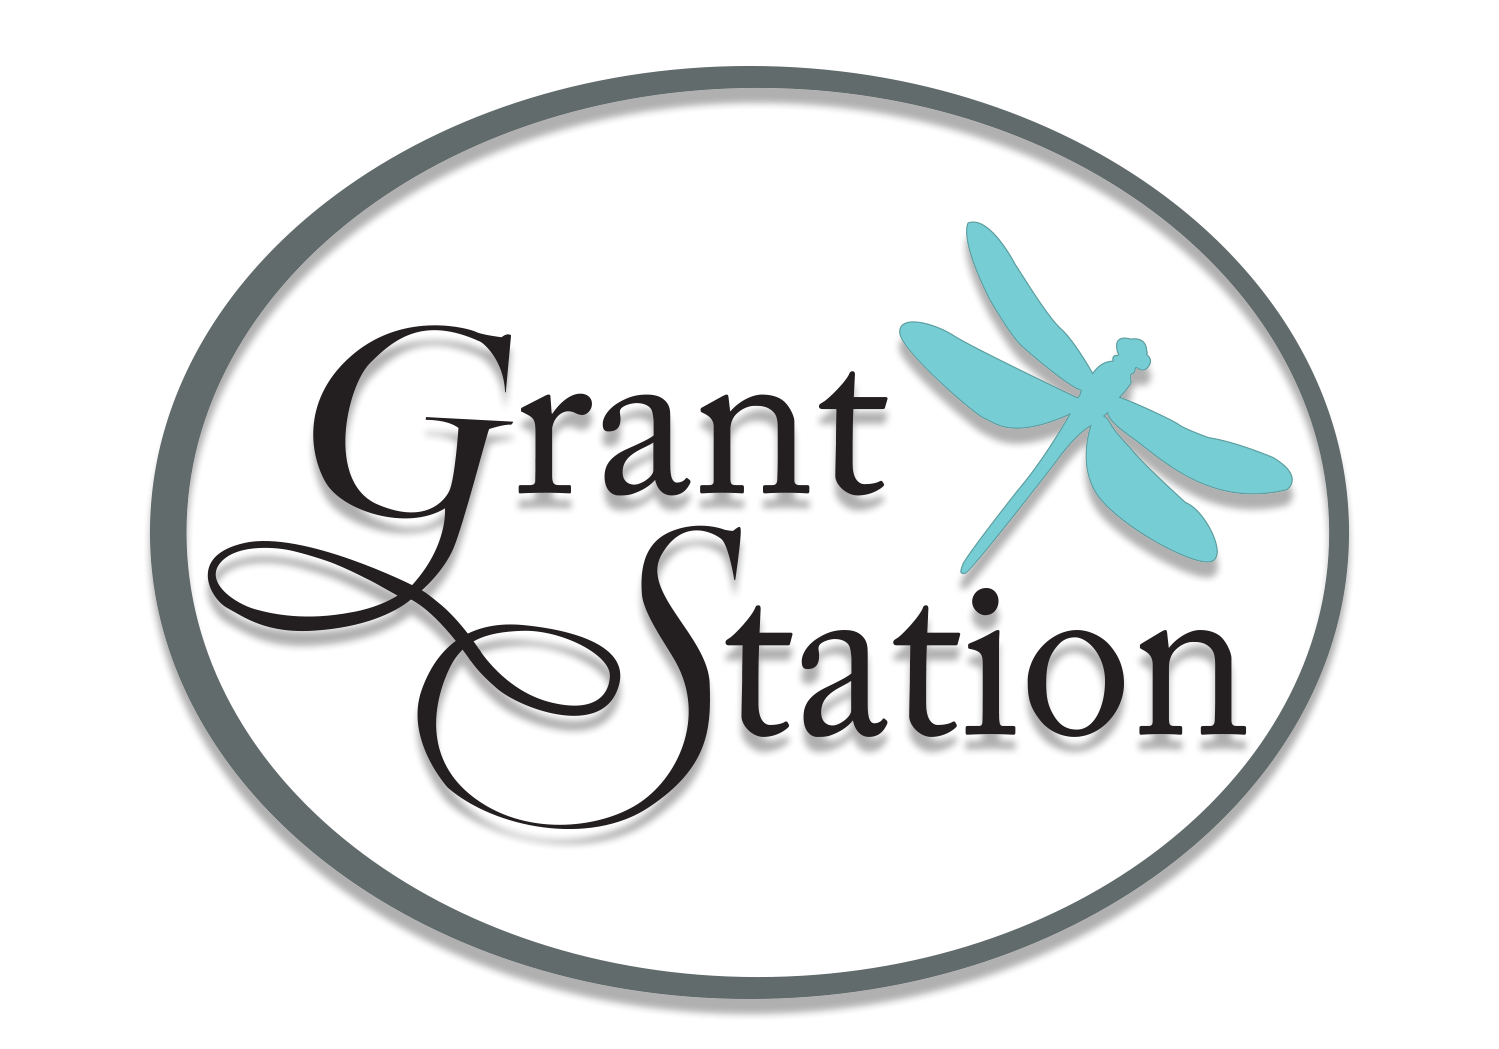 Grant Station